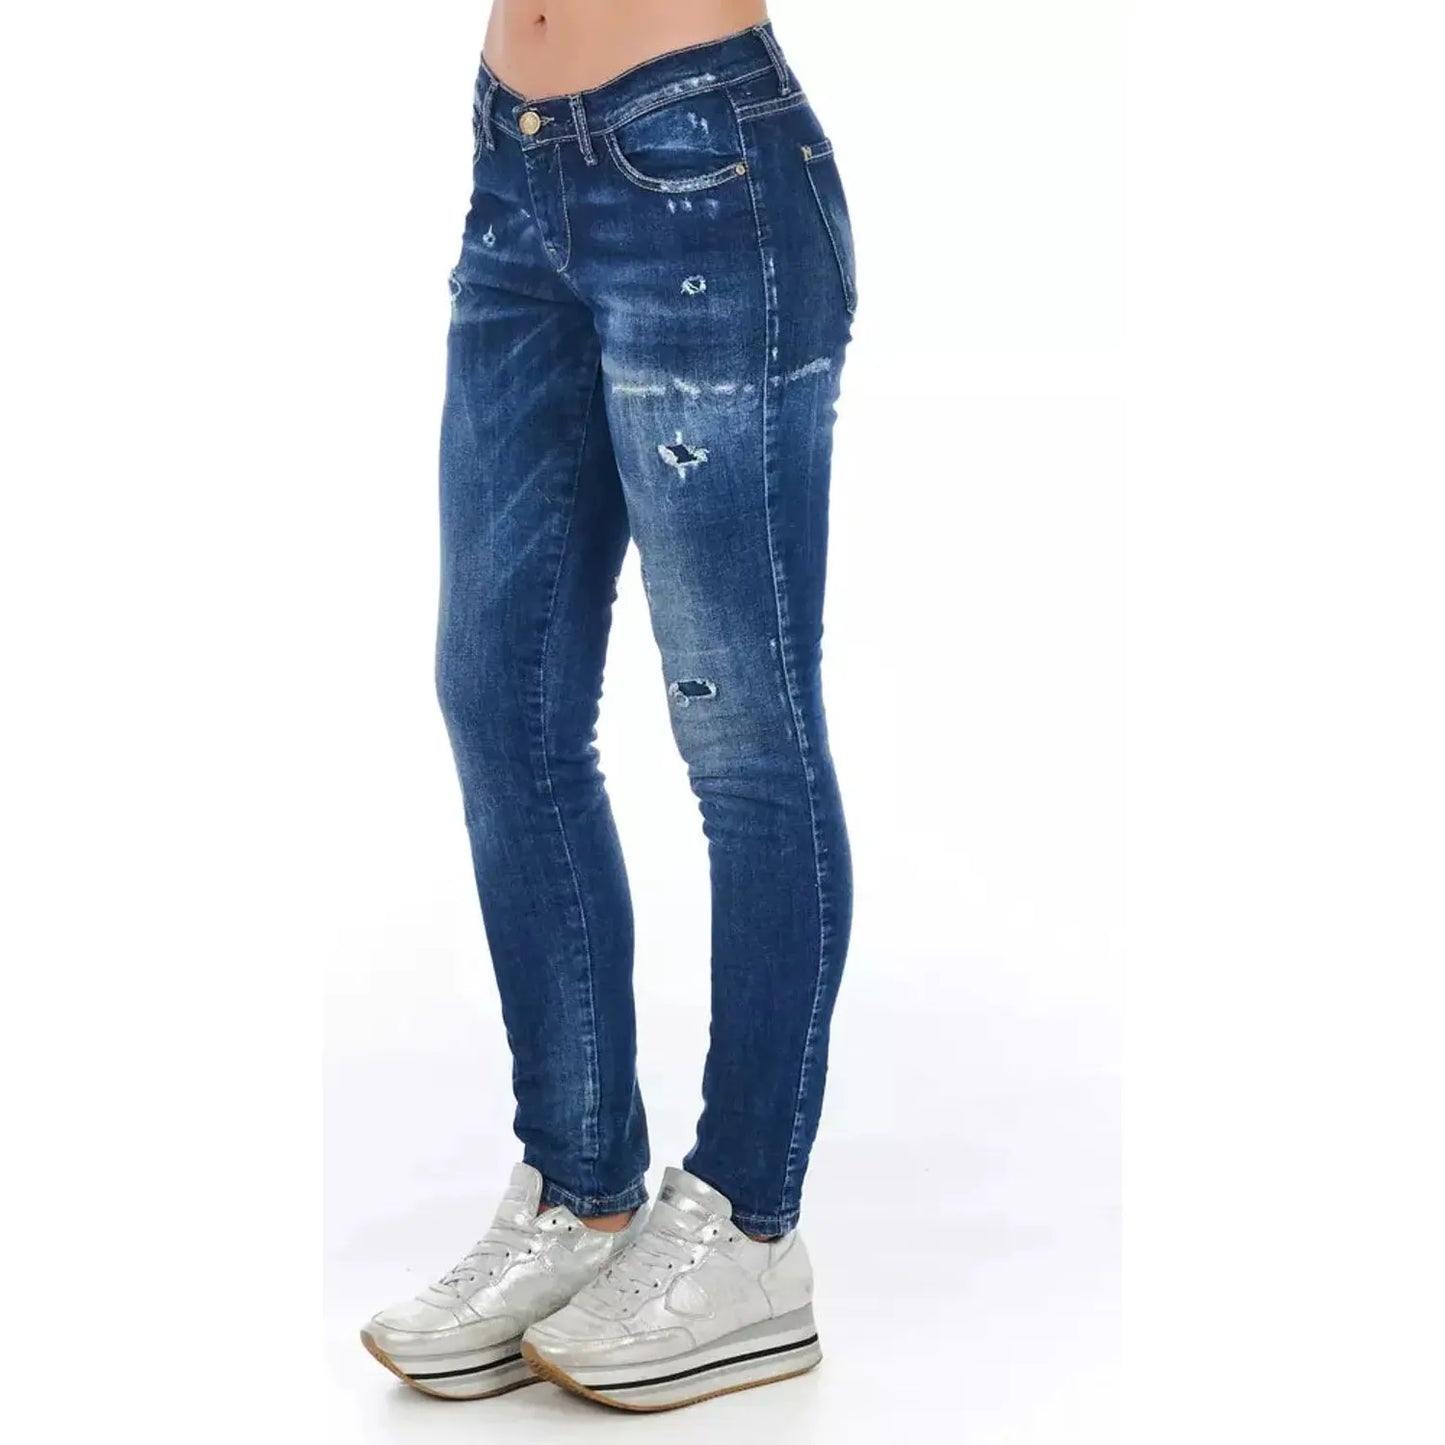 Frankie Morello Chic Worn Wash Skinny Denim Jeans blue-cotton-jeans-pant-52